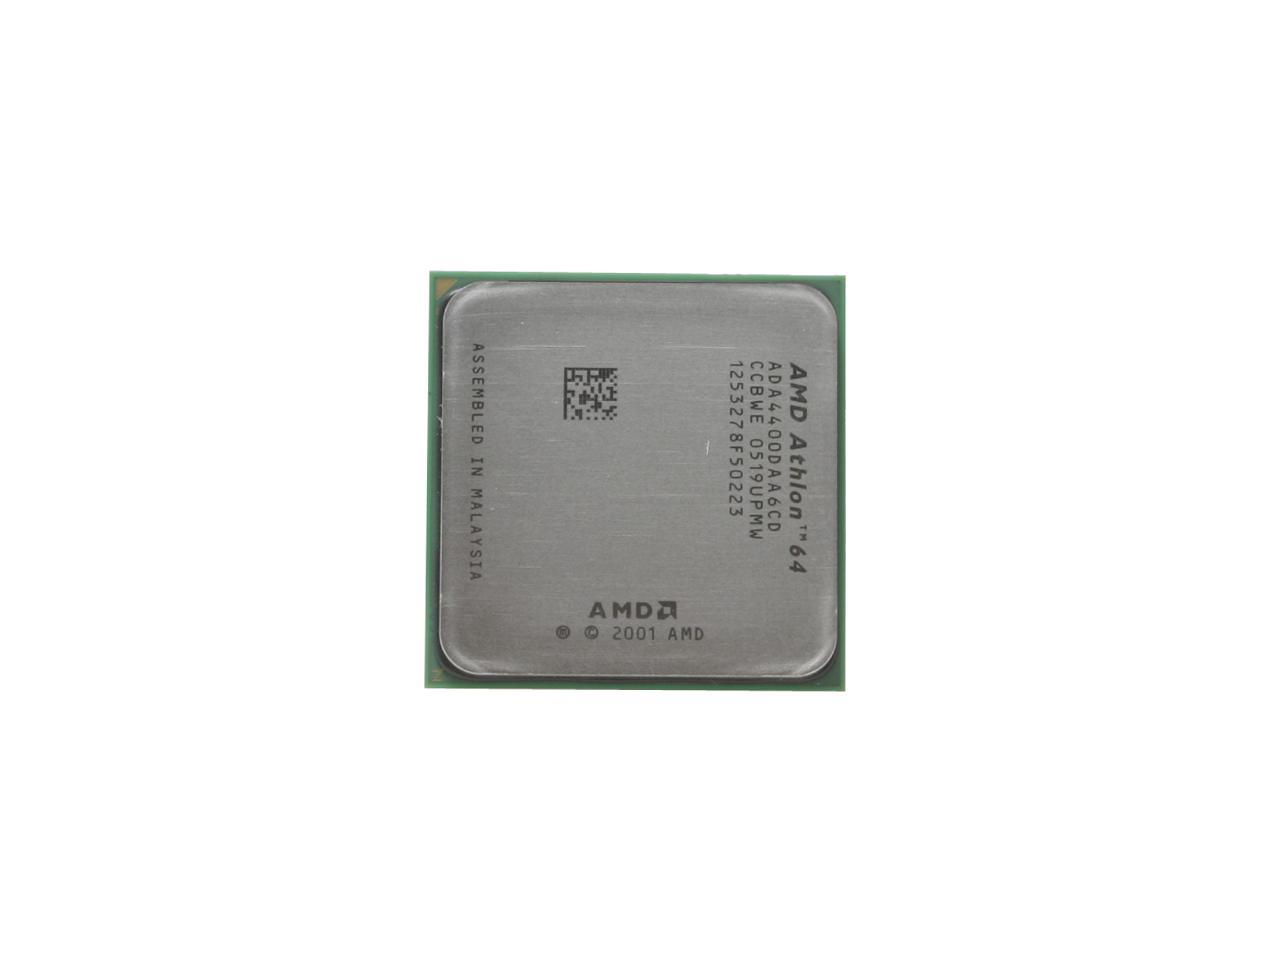 AMD Opteron 6128 he. AMD Athlon 64 x2 Box. AMD Athlon 64 x2 4400+ Box.